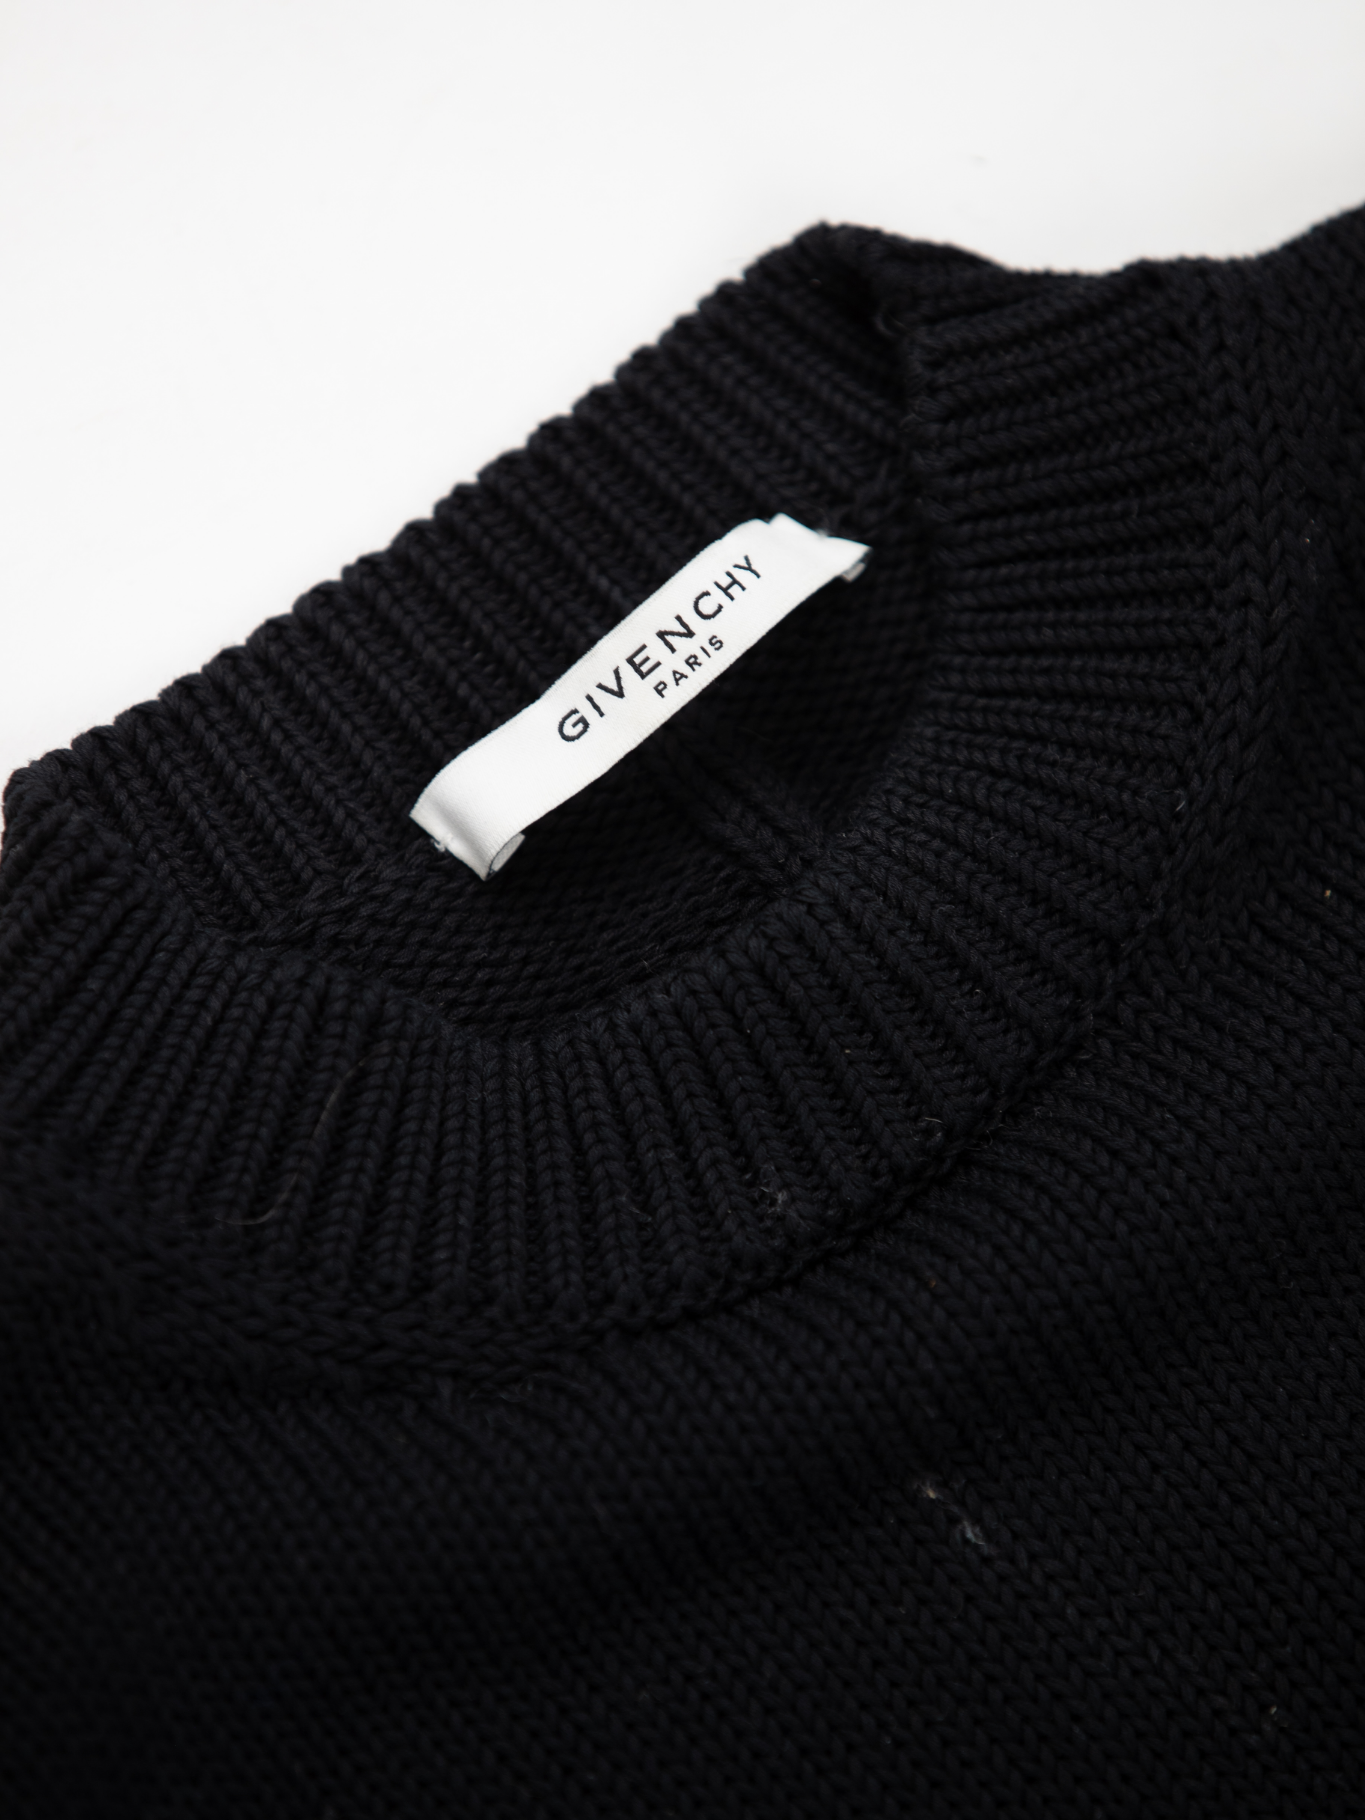 'I Feel Love' Knit Sweater